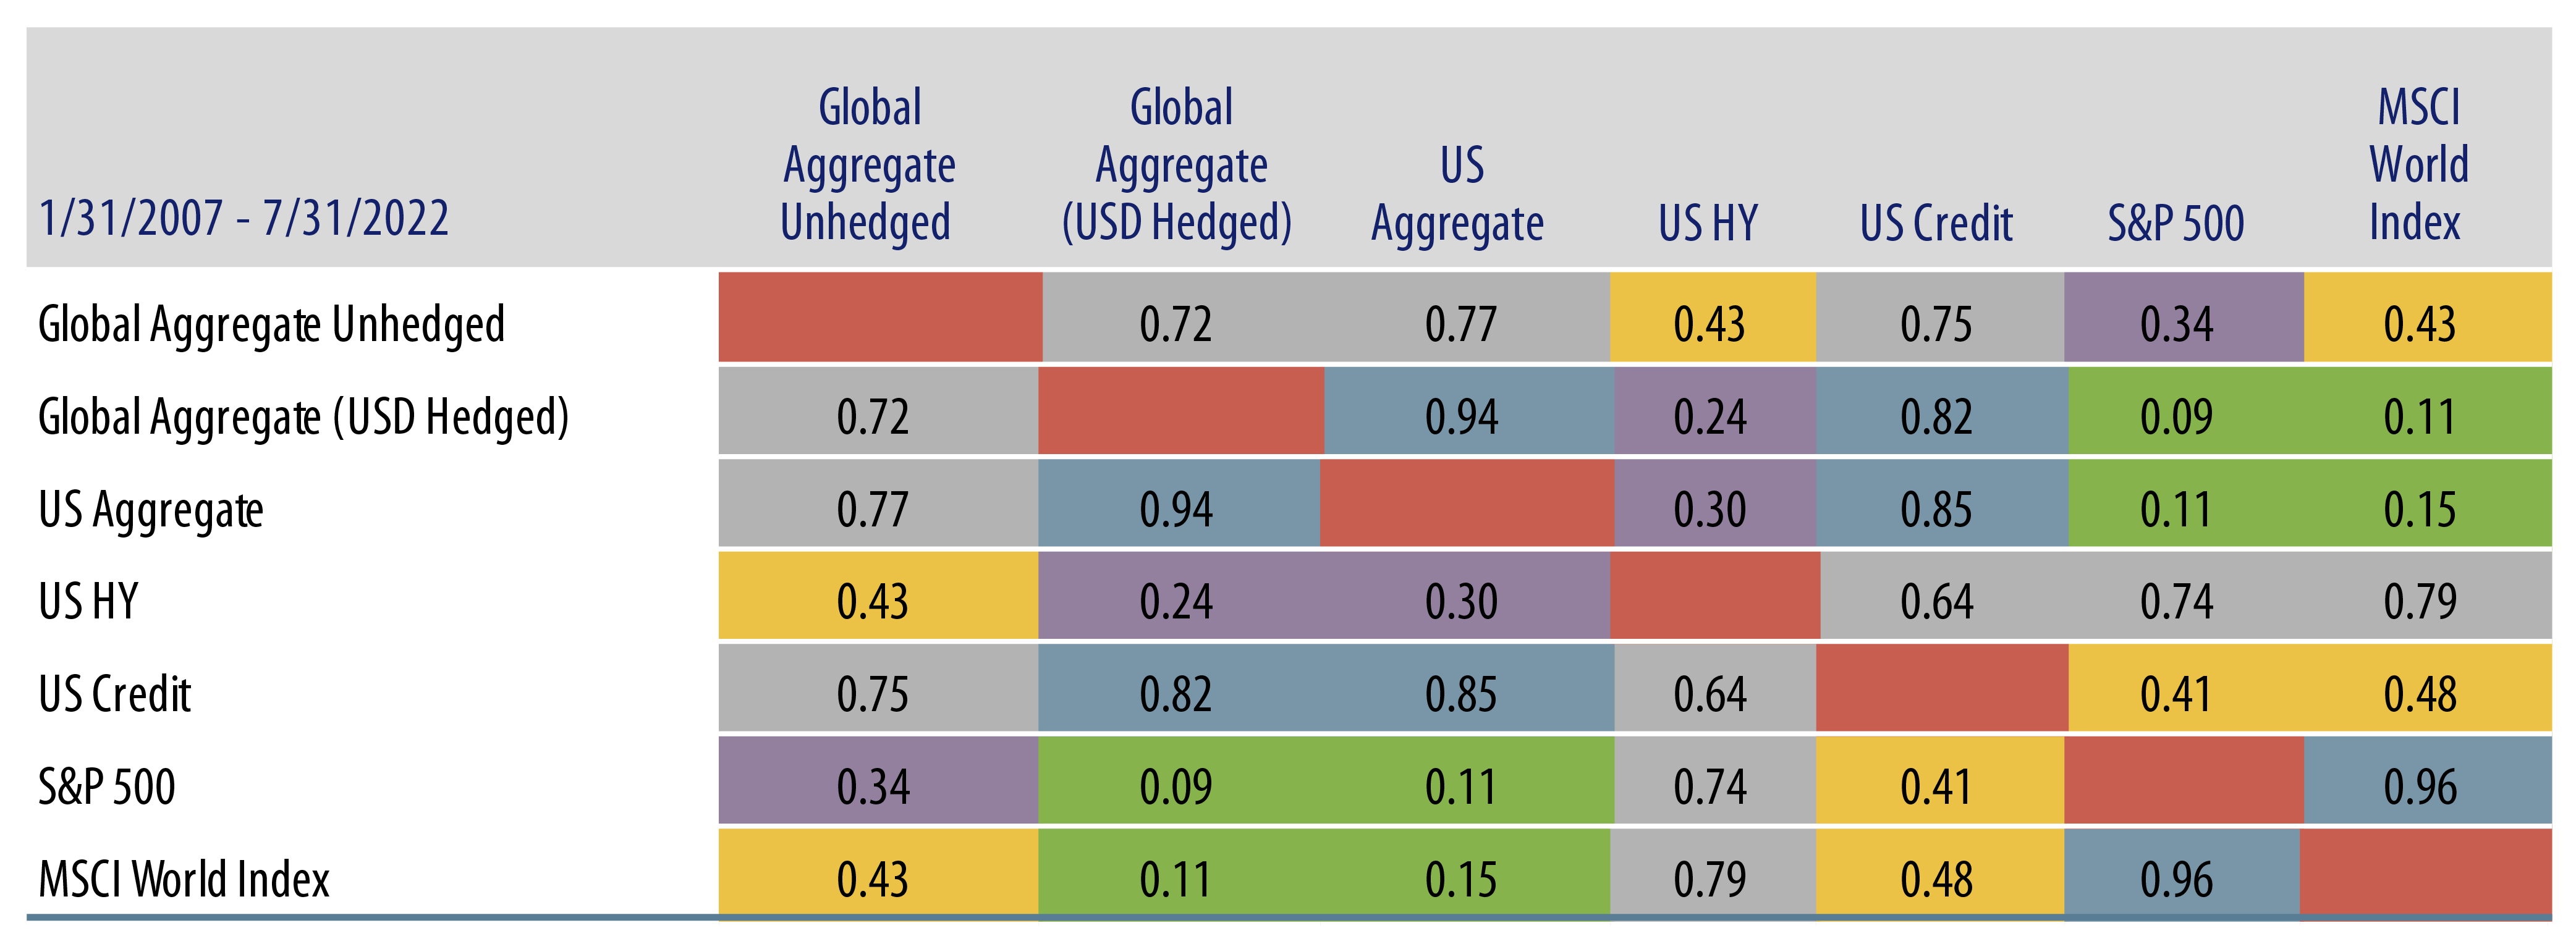 Global Bonds Have Offered Strong Diversification Benefits